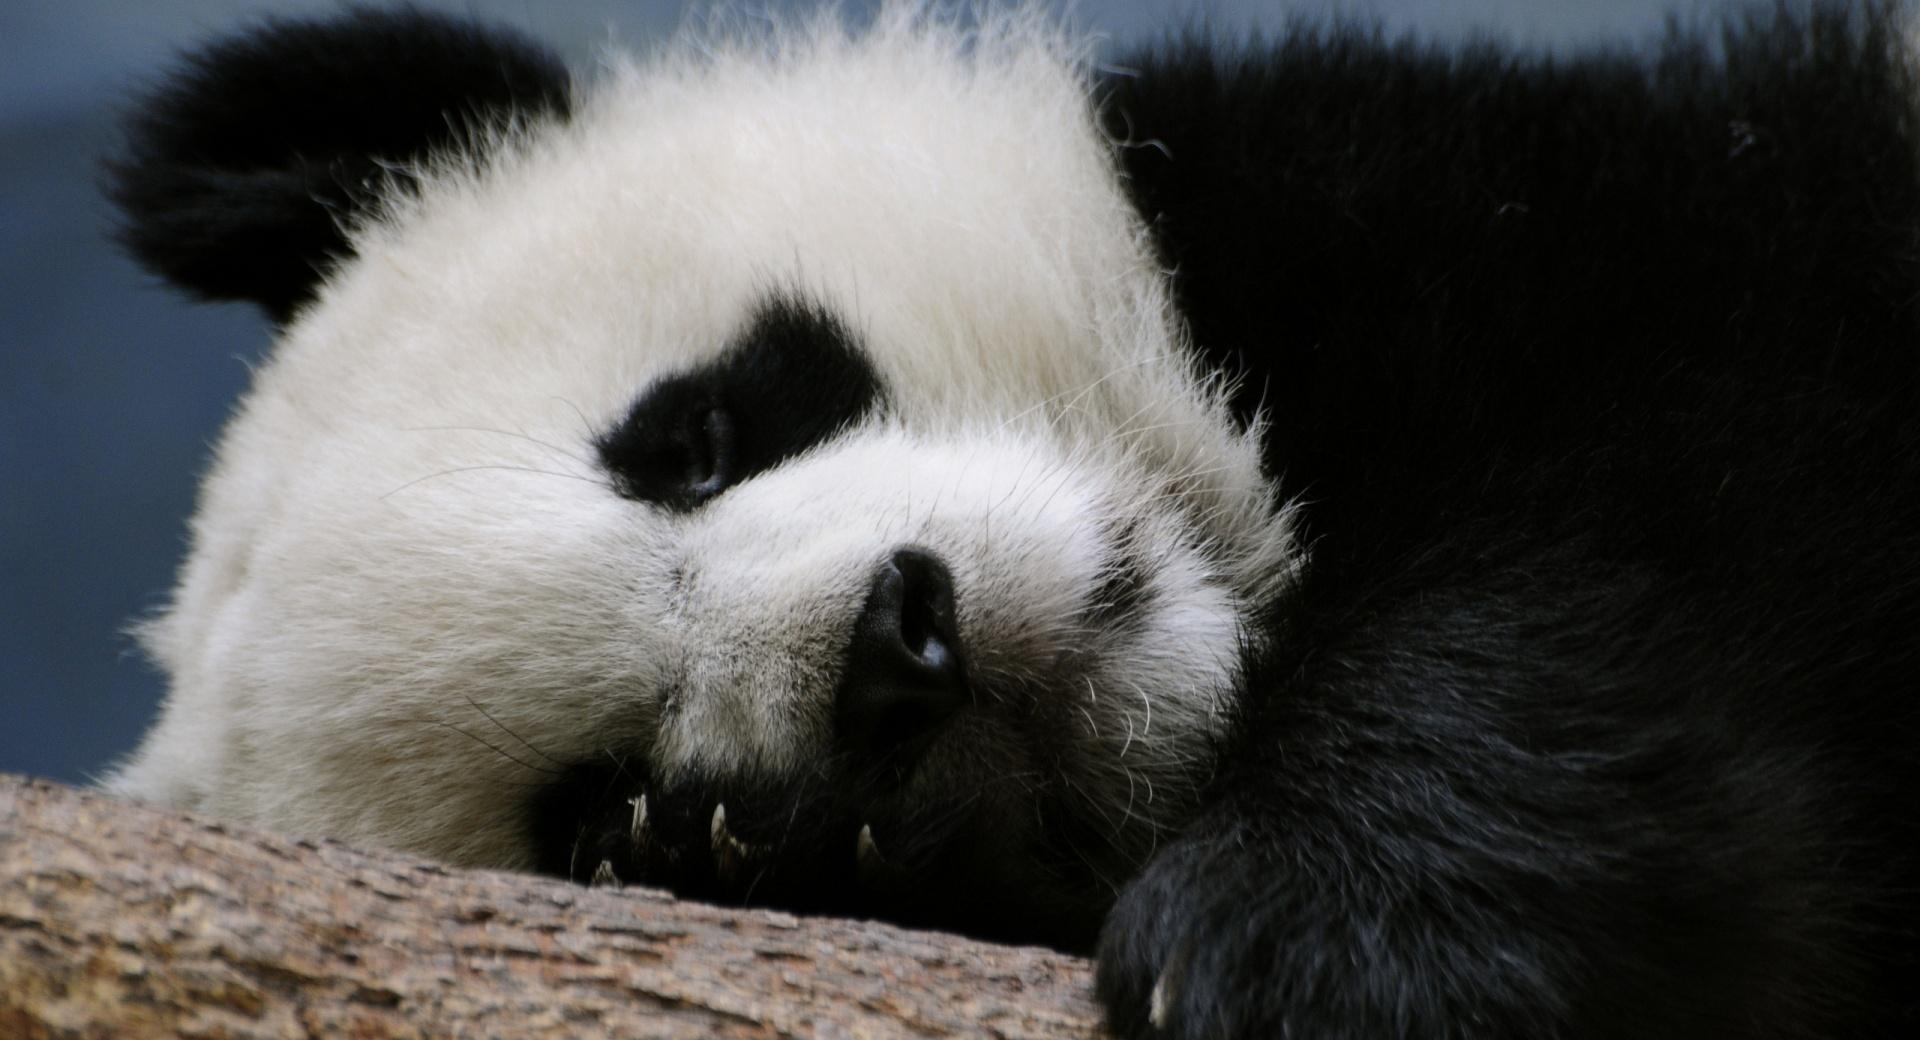 Sleeping Panda at 1152 x 864 size wallpapers HD quality